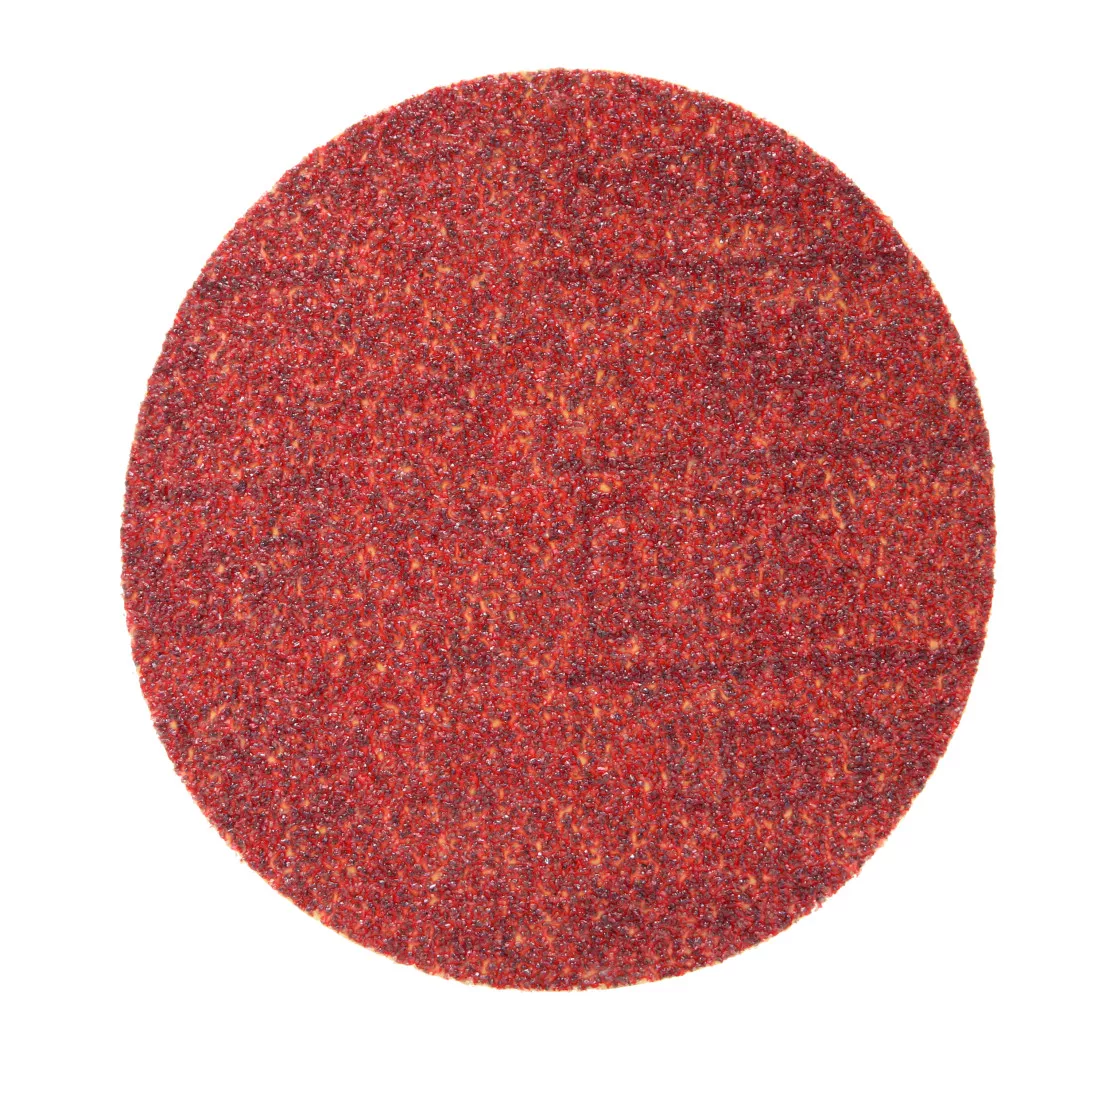 3M™ Hookit™ Red Abrasive Disc, 01303, 5 in, 40, 25 discs per carton, 6
cartons per case